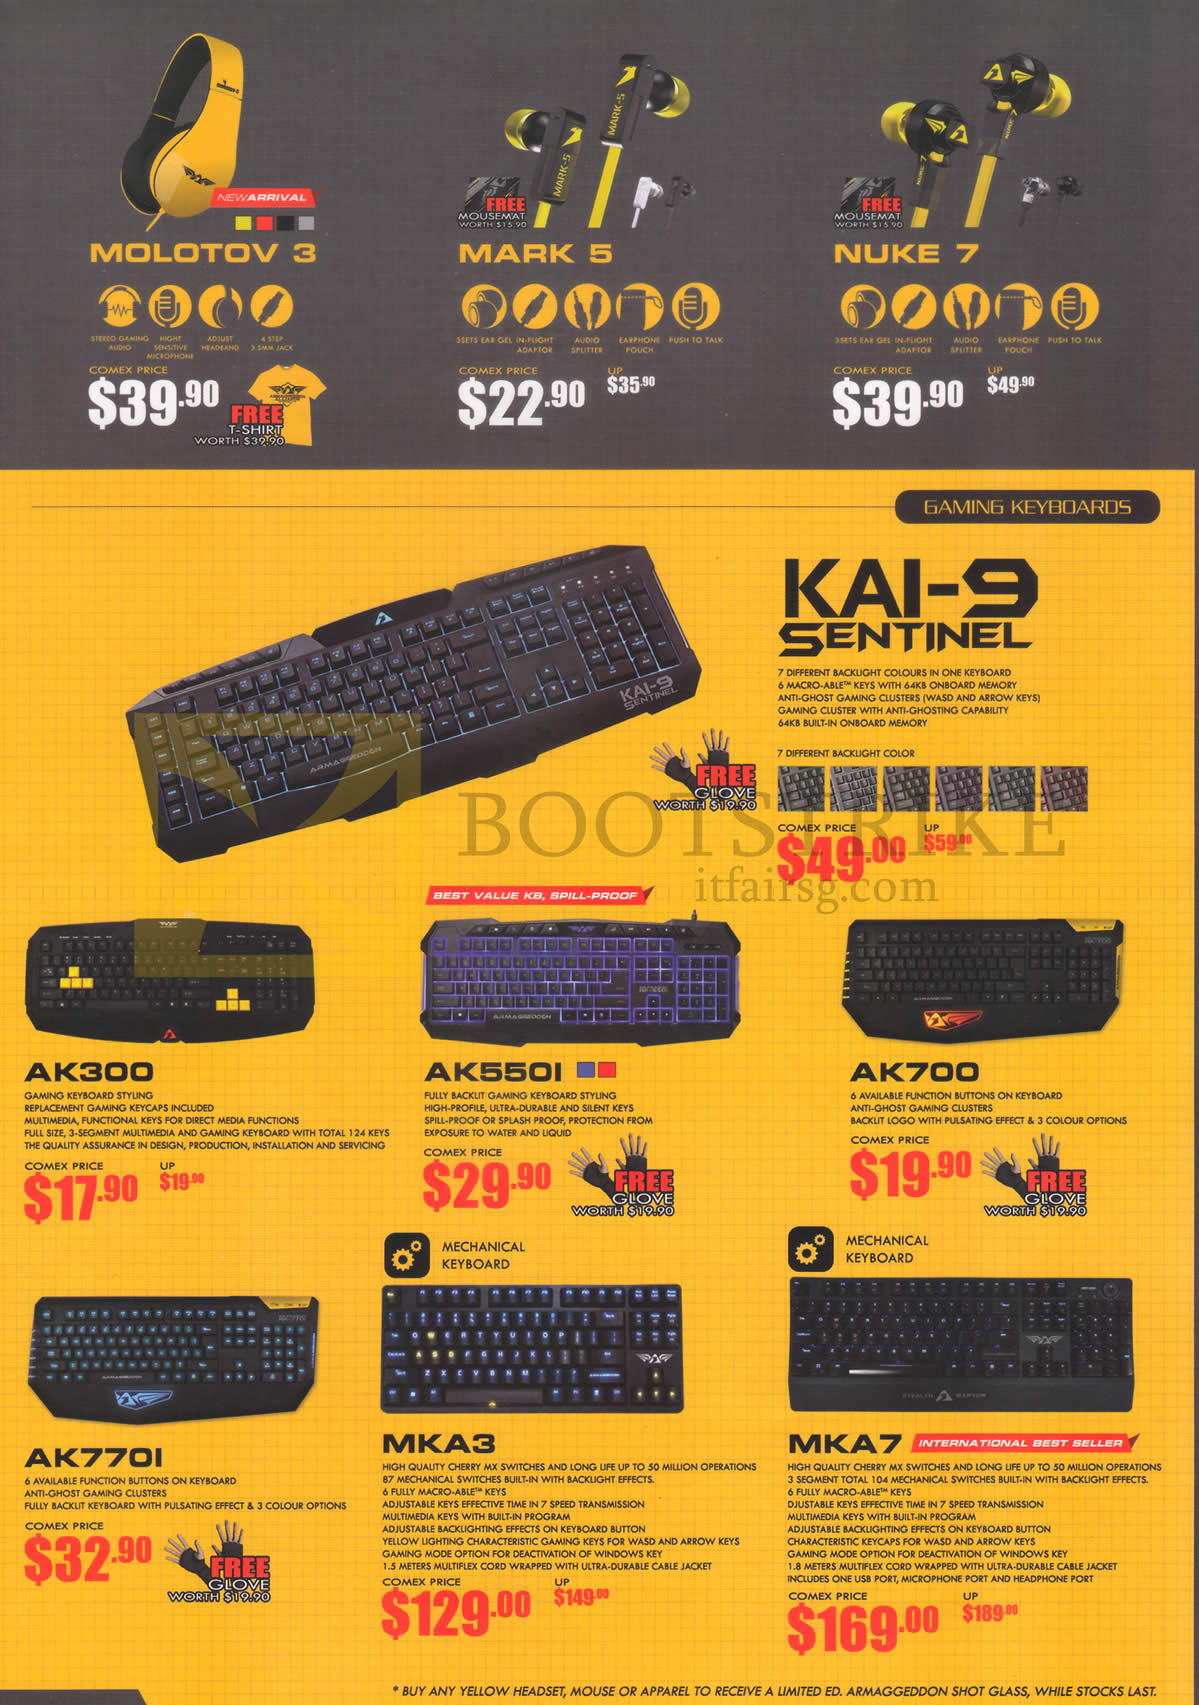 COMEX 2015 price list image brochure of Armaggeddon Gaming Headsets Molotov 3, Earphones Mark 5, Nuke 7, Gaming Keyboards KAI-9 Sentinel, AK300, AK550I, AK700, AK770I, MKA3, MKA7